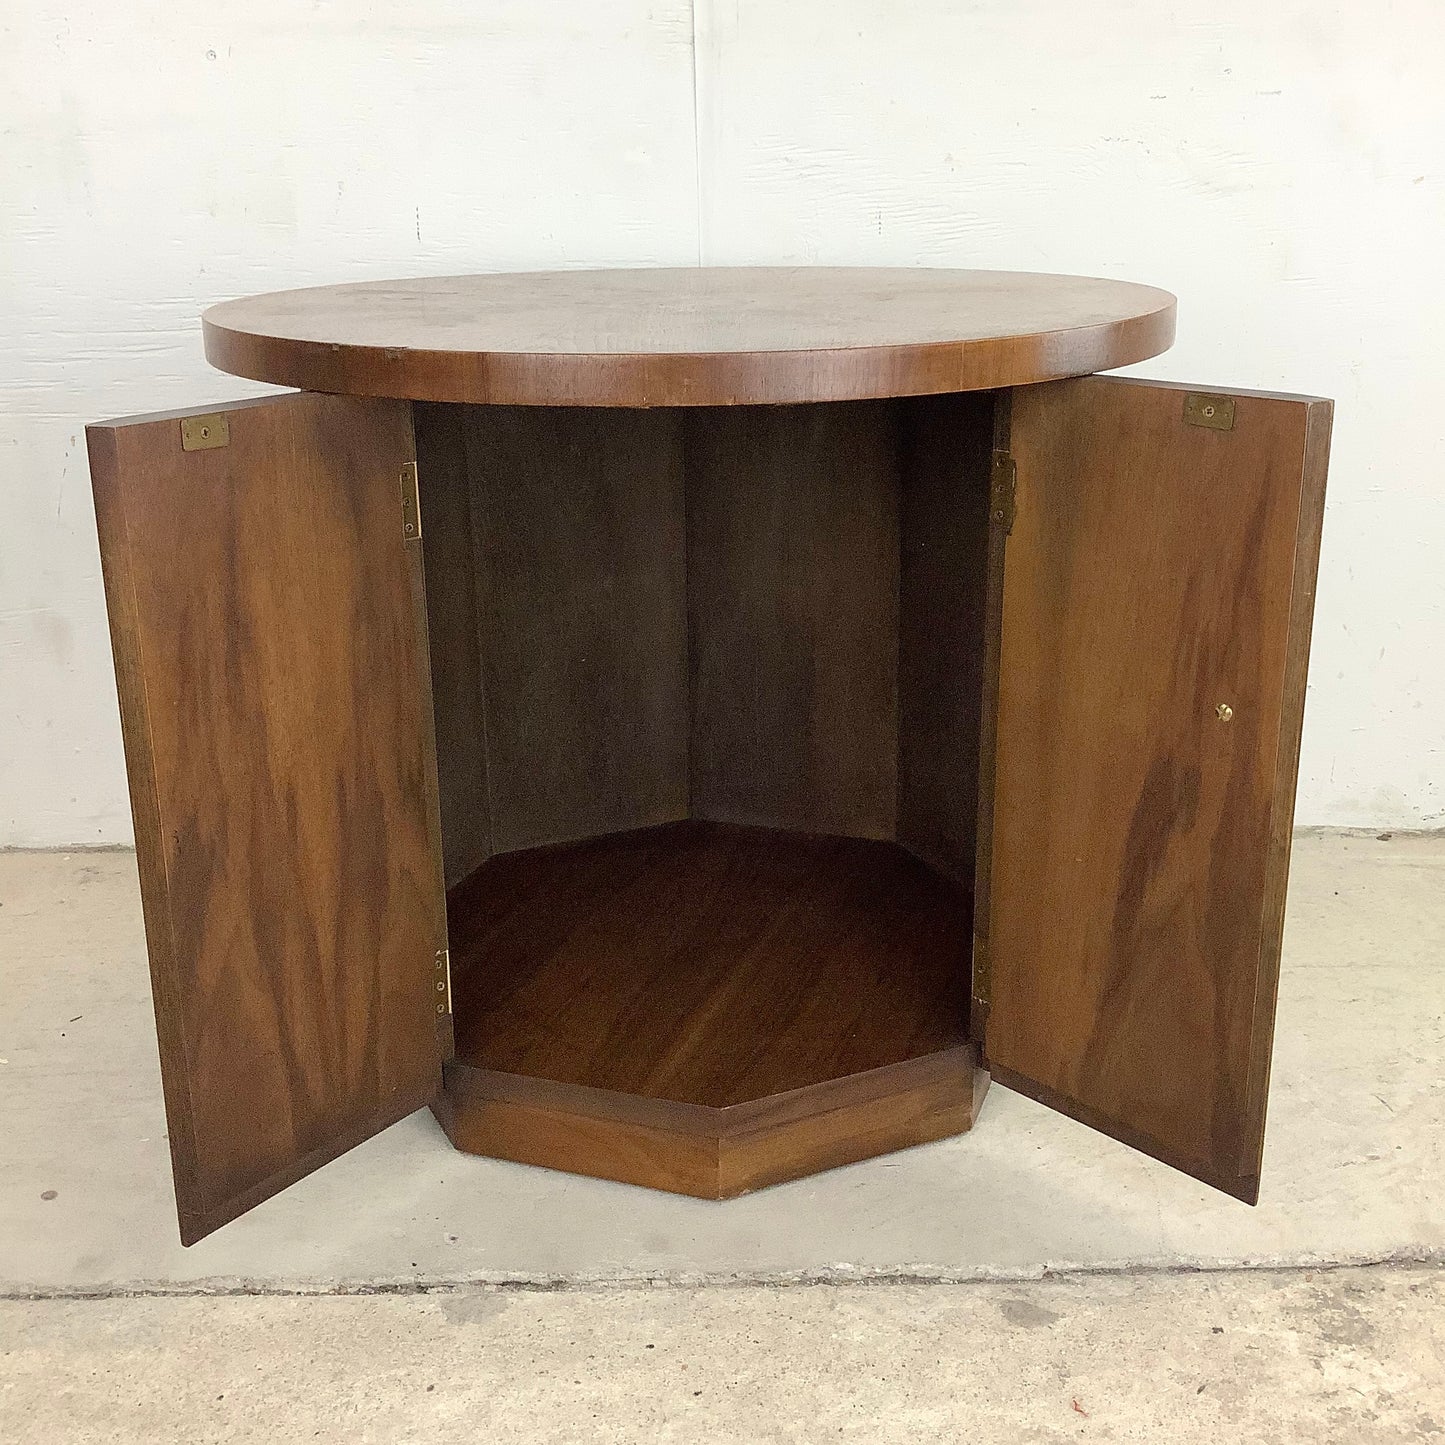 Vintage Mid-Century Circular End Table Cabinet- Walnut Finish